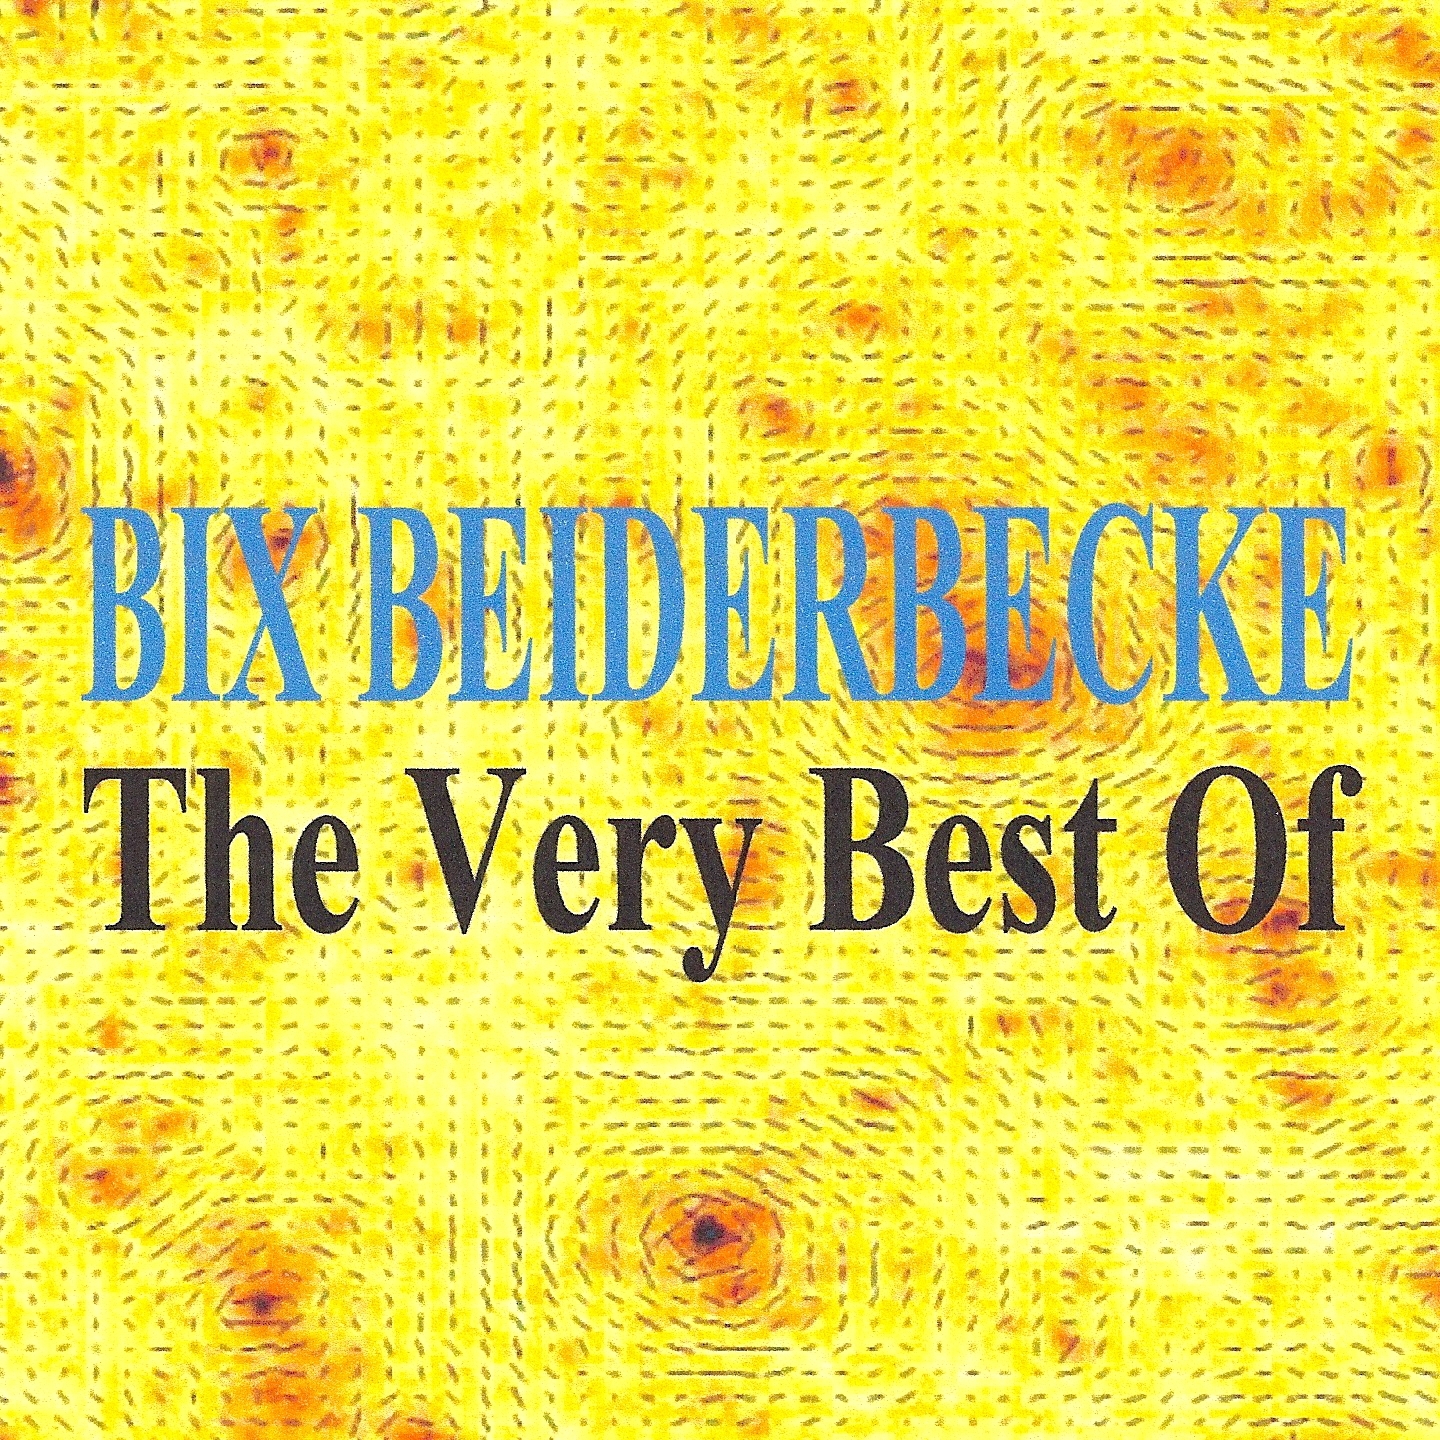 The Very Best of - Bix Beiderbecke